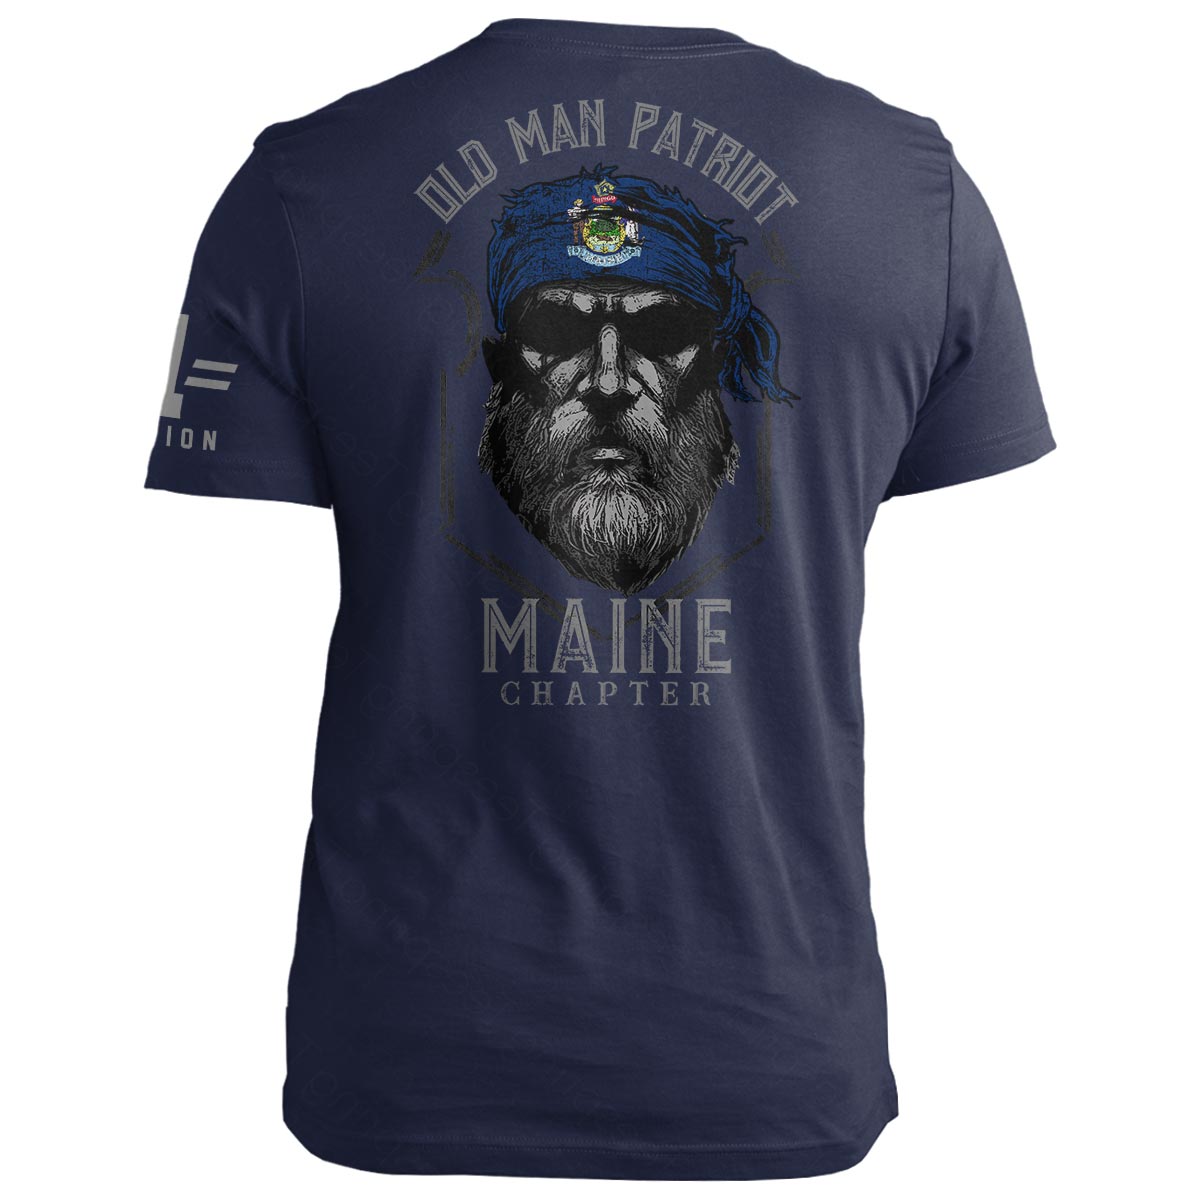 Maine Old Man Patriot